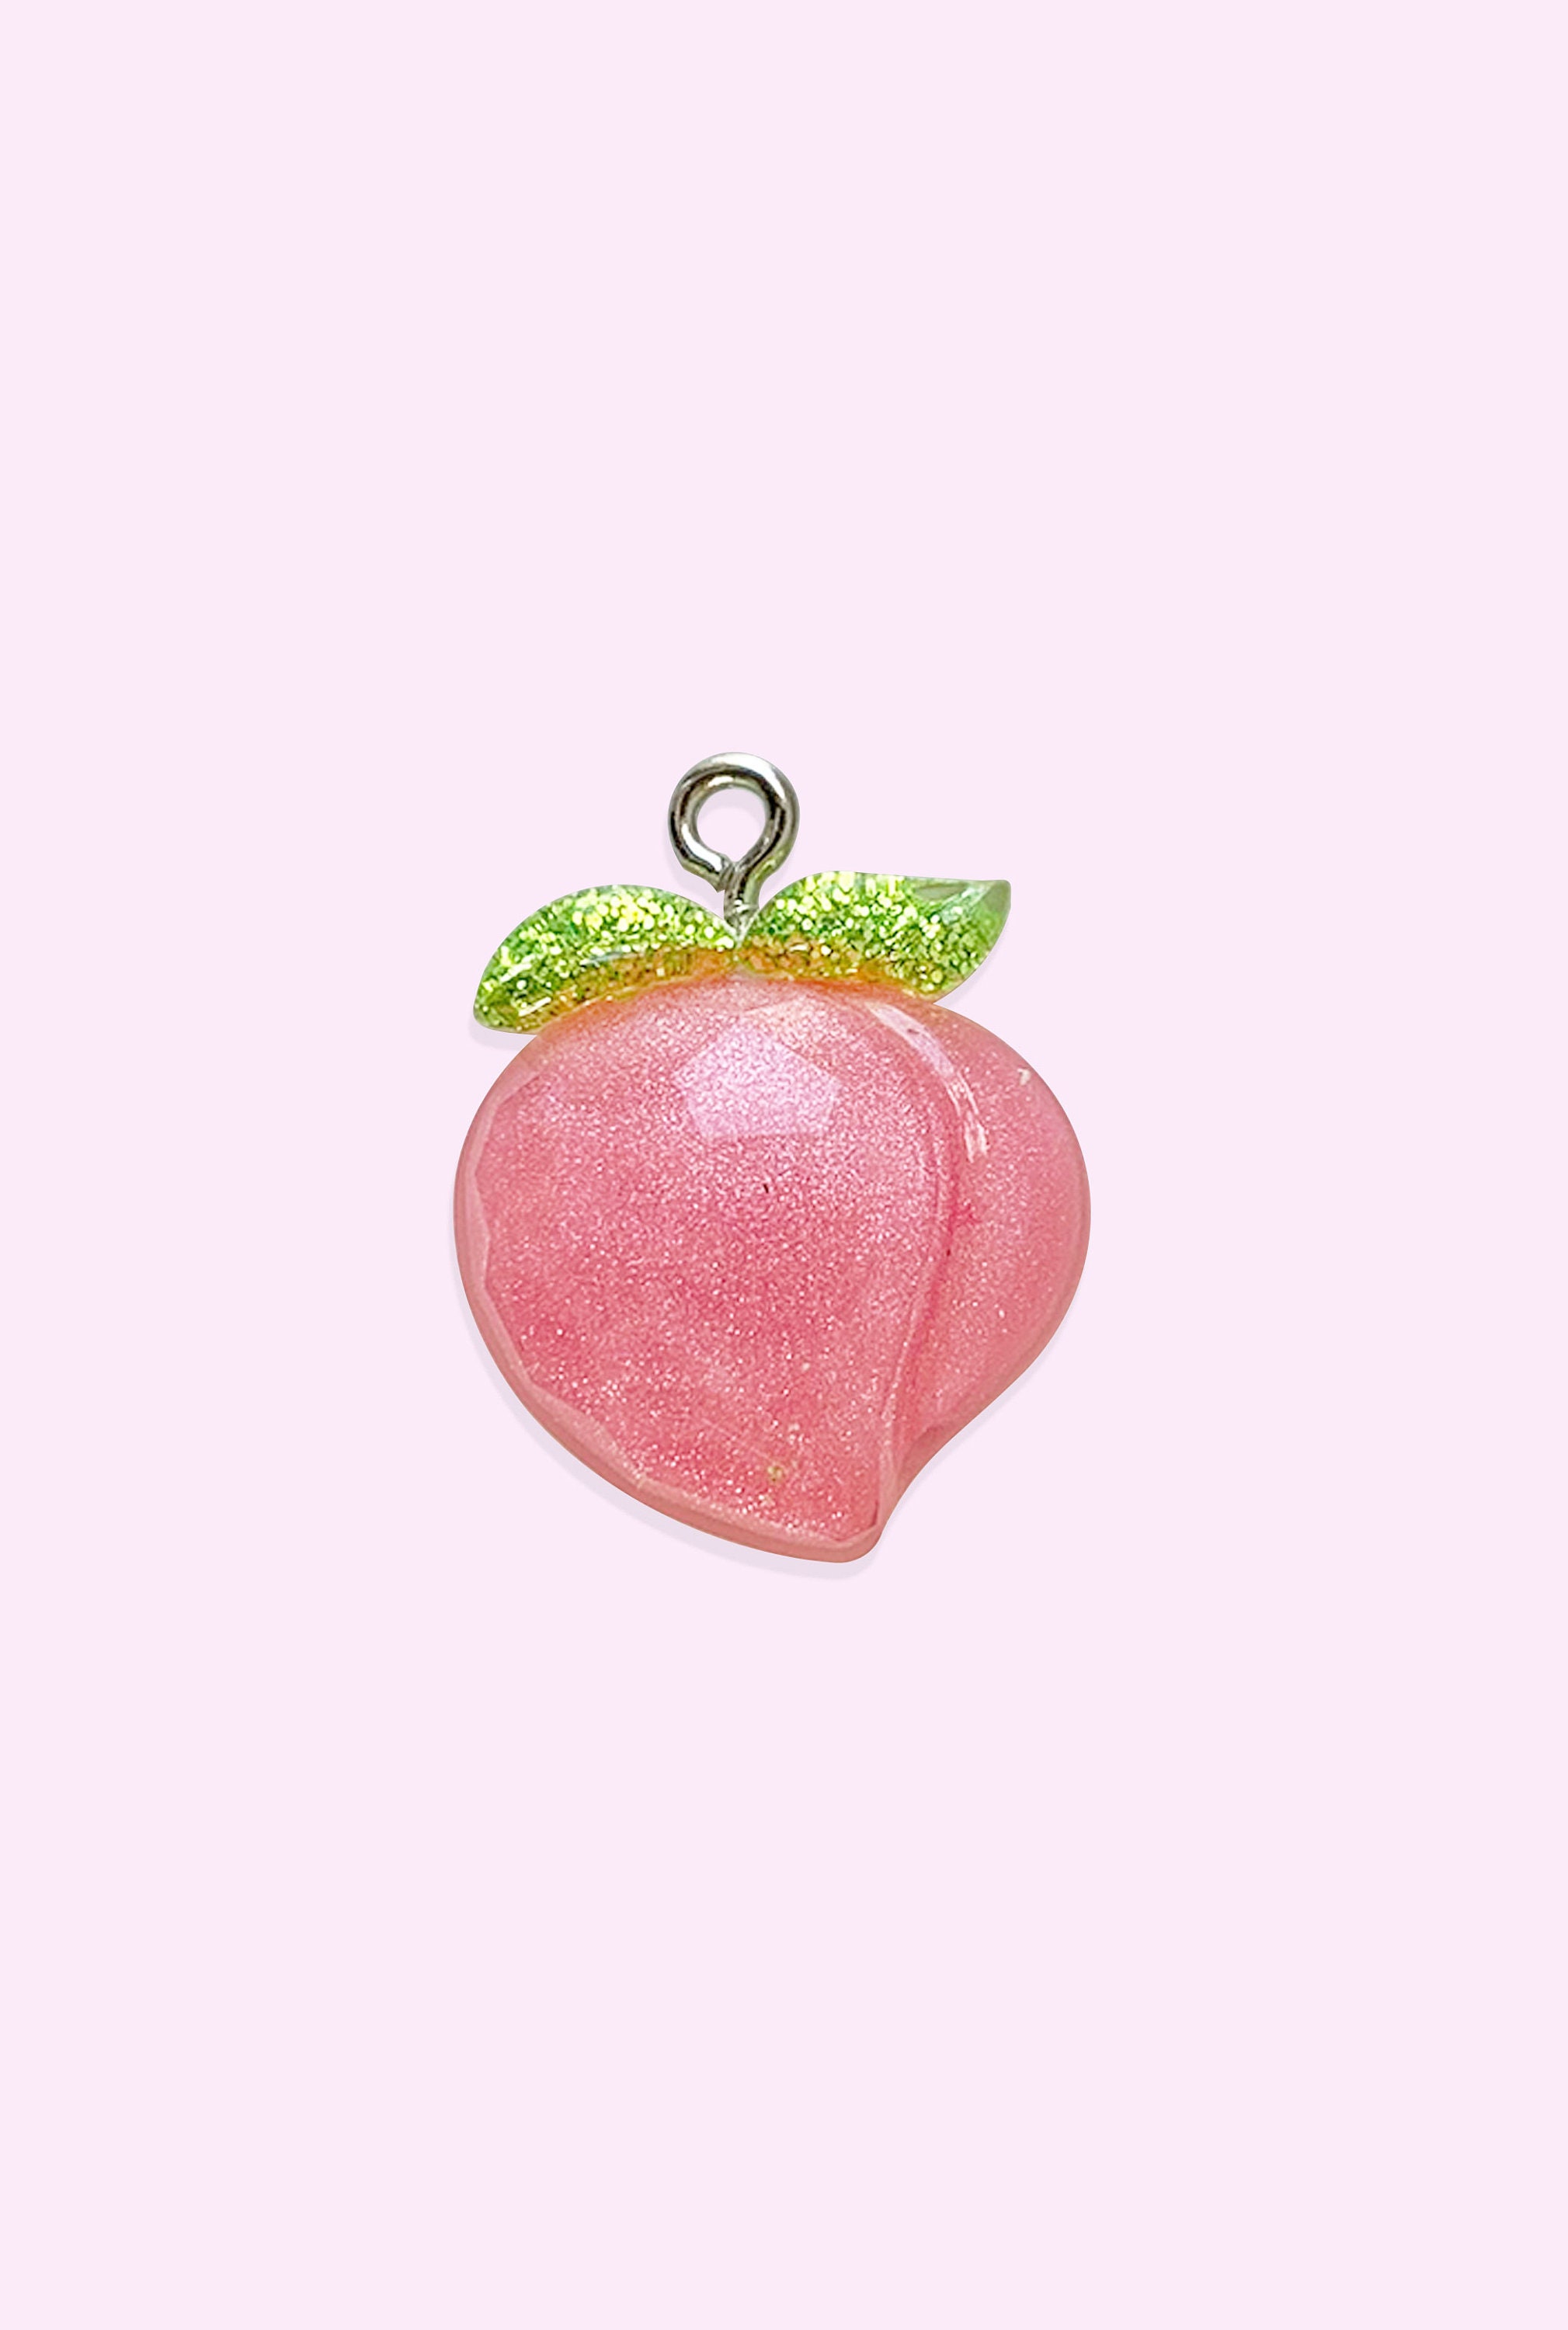 Pink peach charms, fruit charms, charm bracelets, cute enamel charms,  jewelry making, bracelet charms